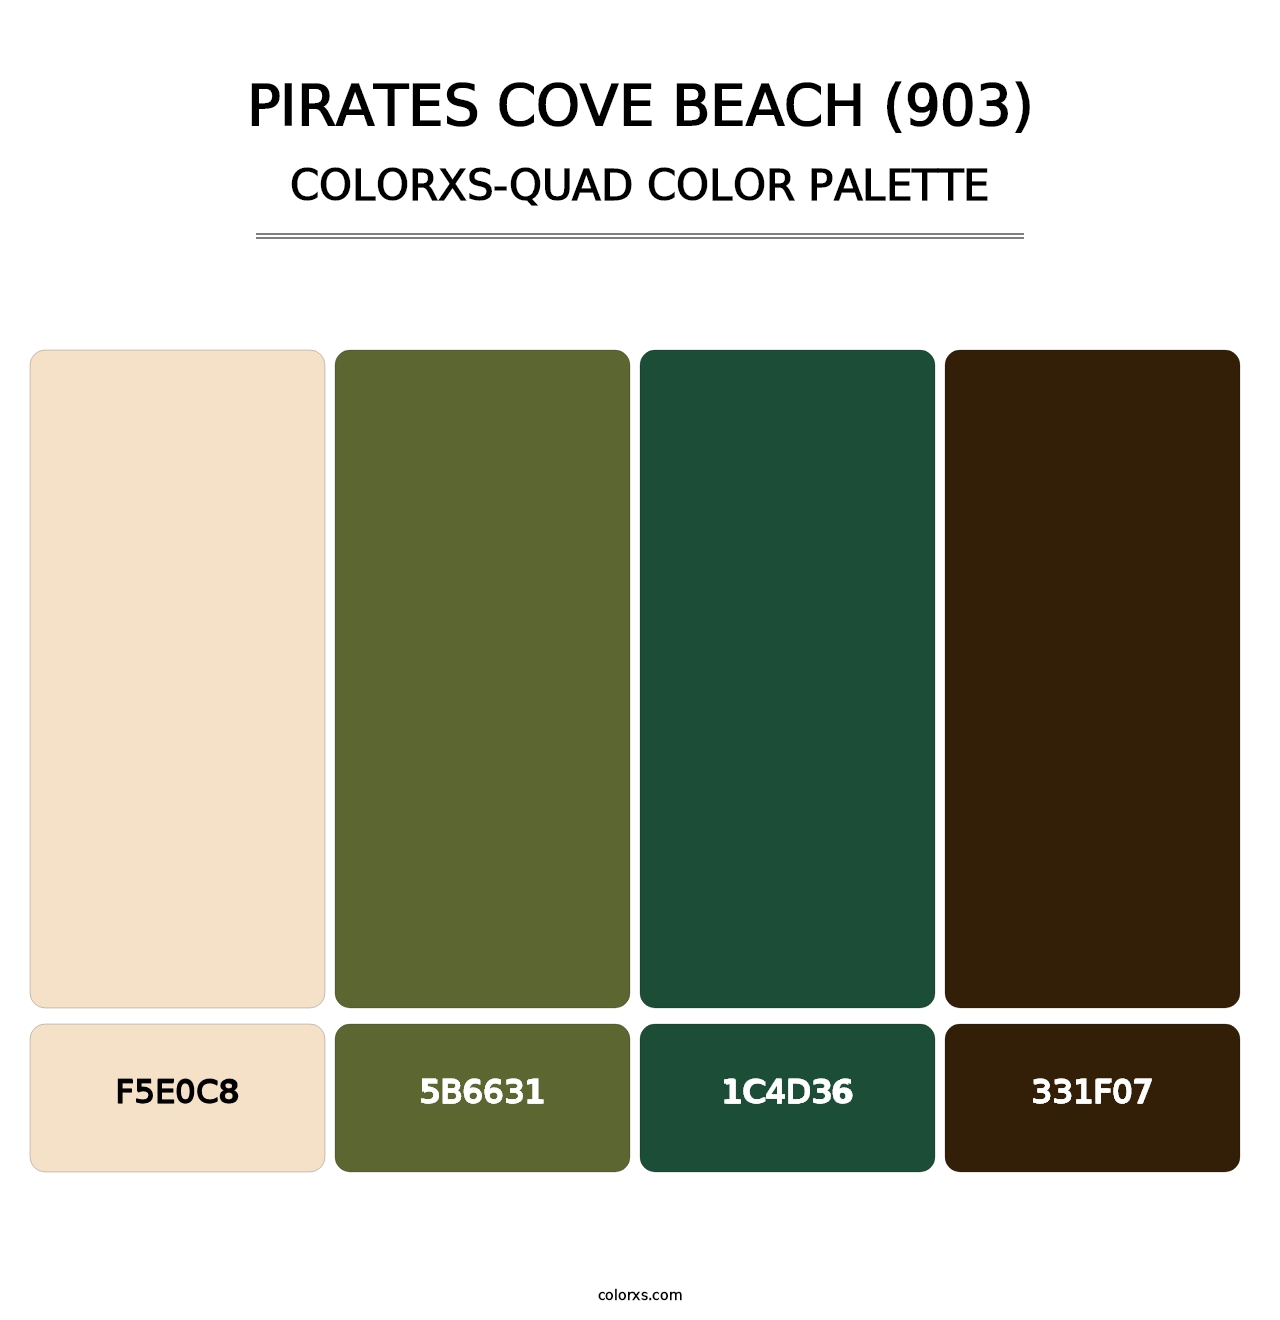 Pirates Cove Beach (903) - Colorxs Quad Palette